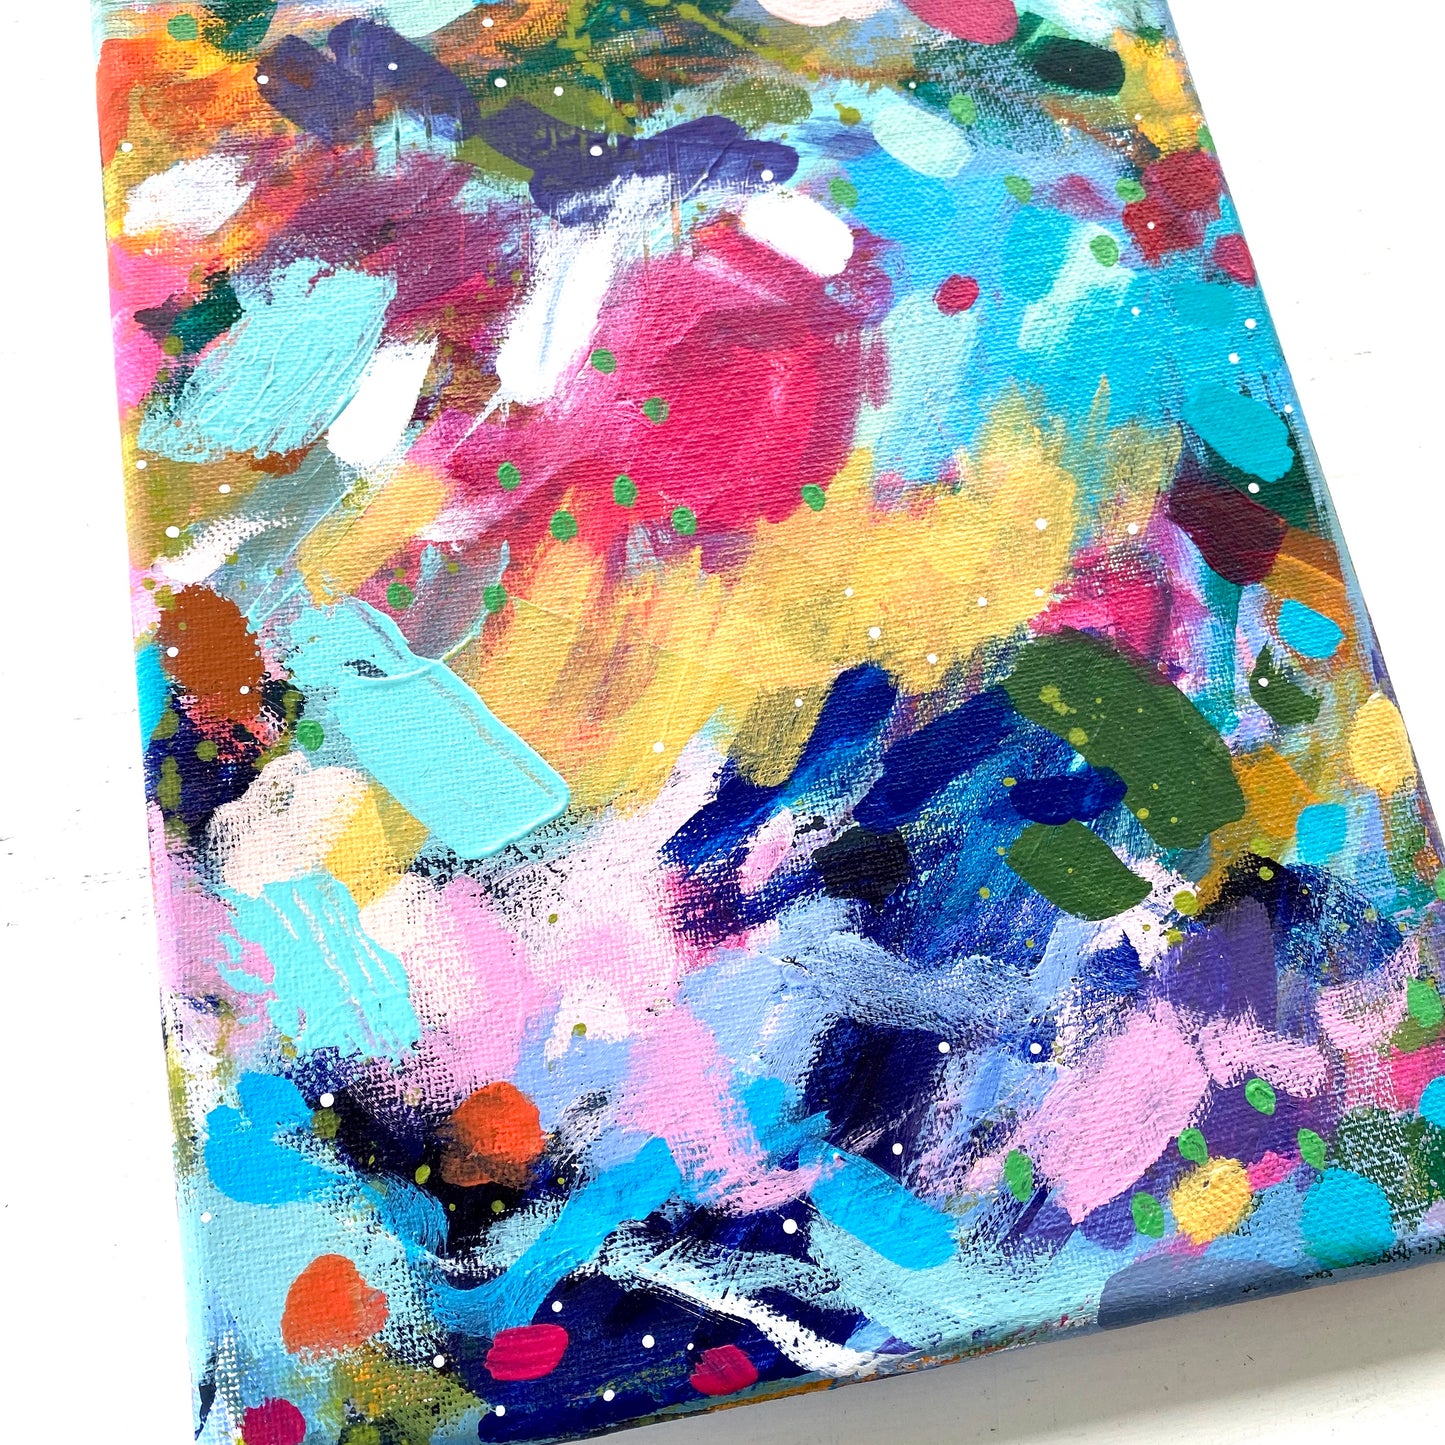 “Rainbow Sprinkles” 8x10 inch original painting on canvas